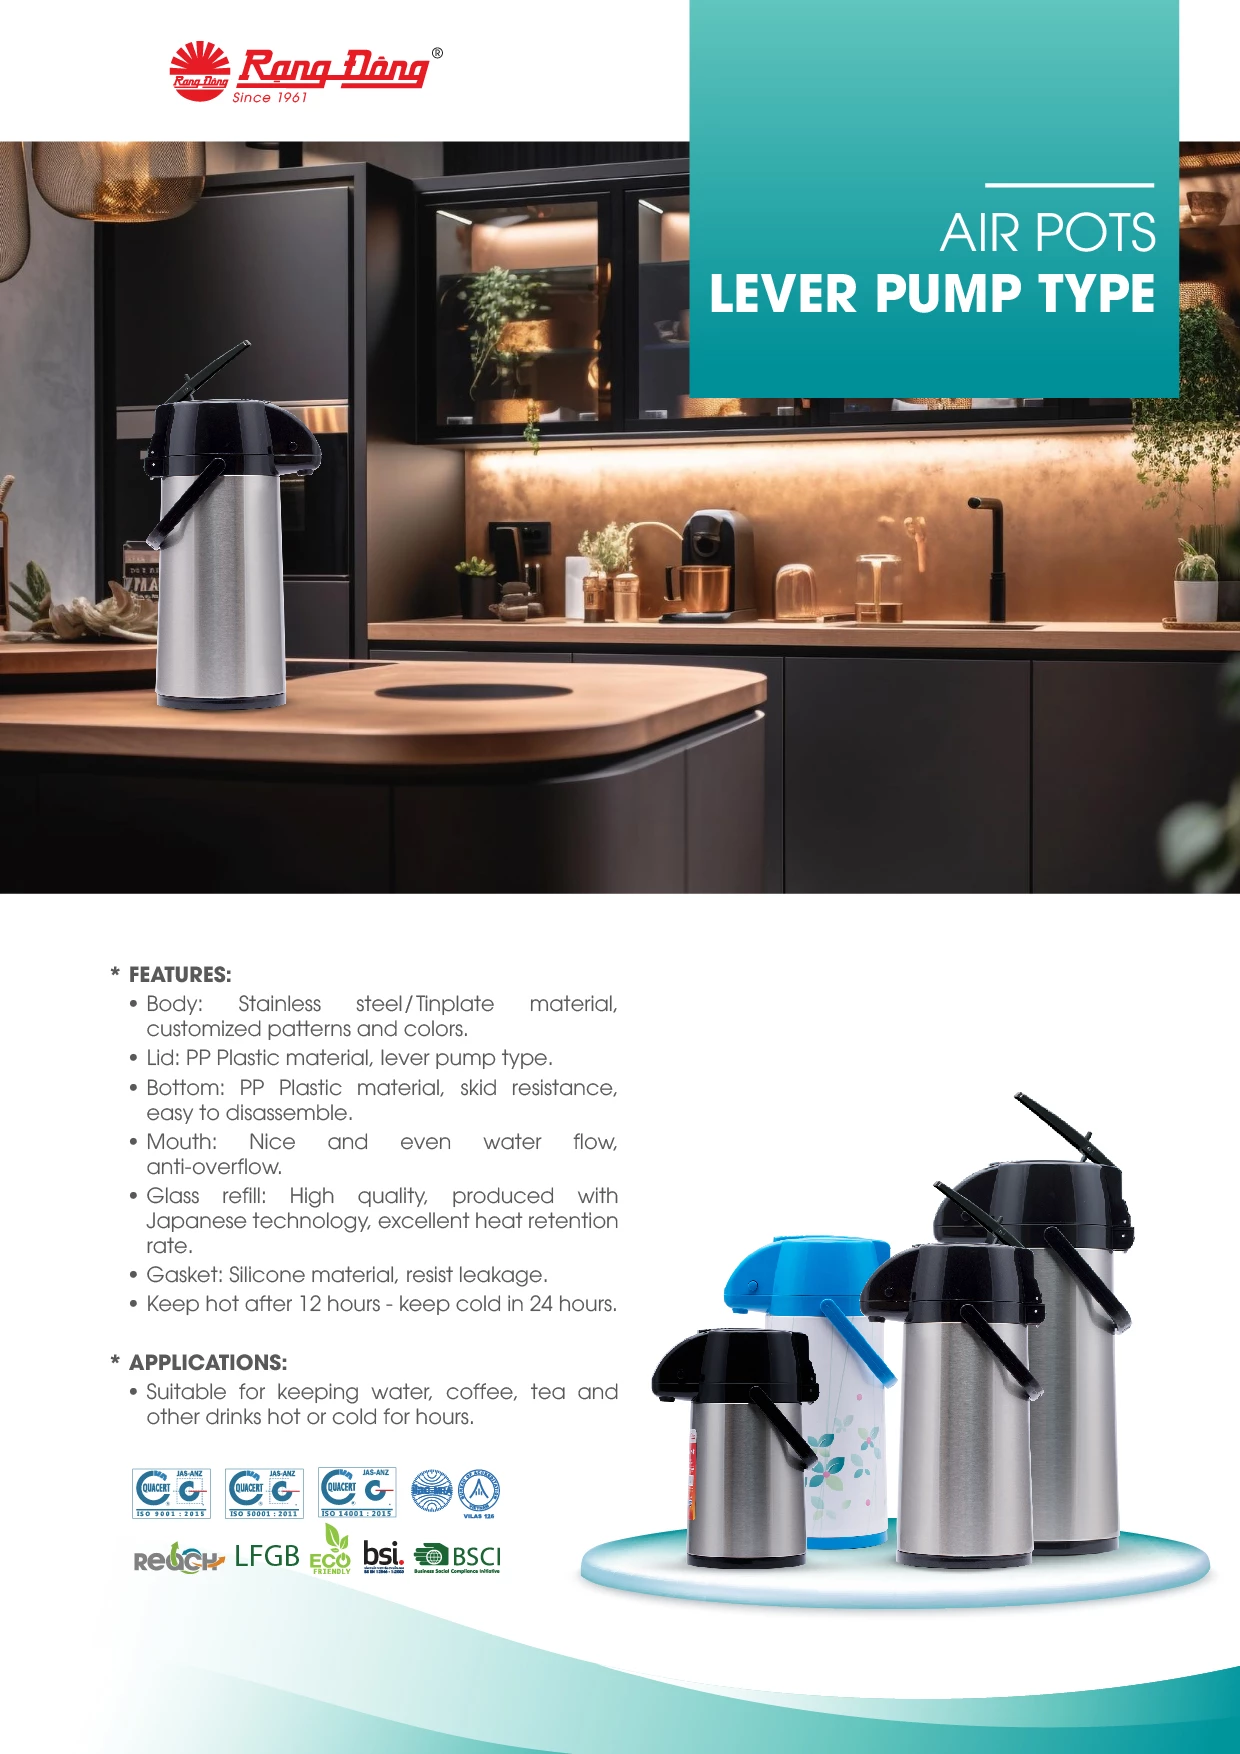 Air Pot Lever pump type airpot